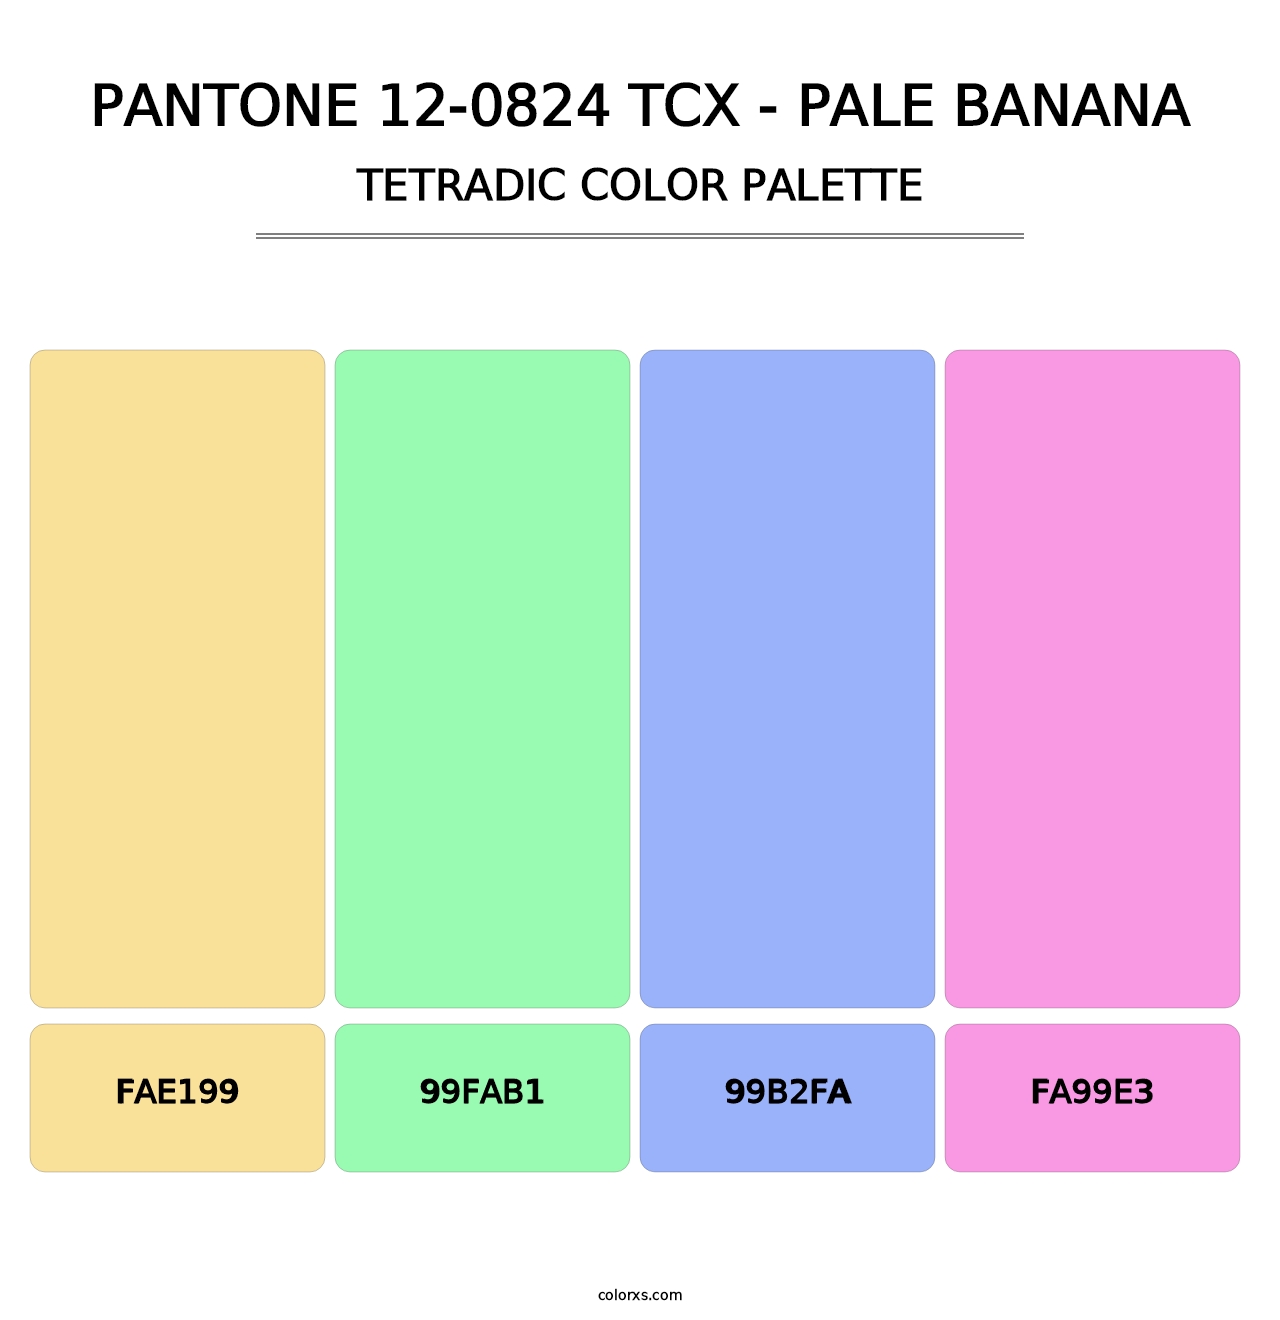 PANTONE 12-0824 TCX - Pale Banana - Tetradic Color Palette